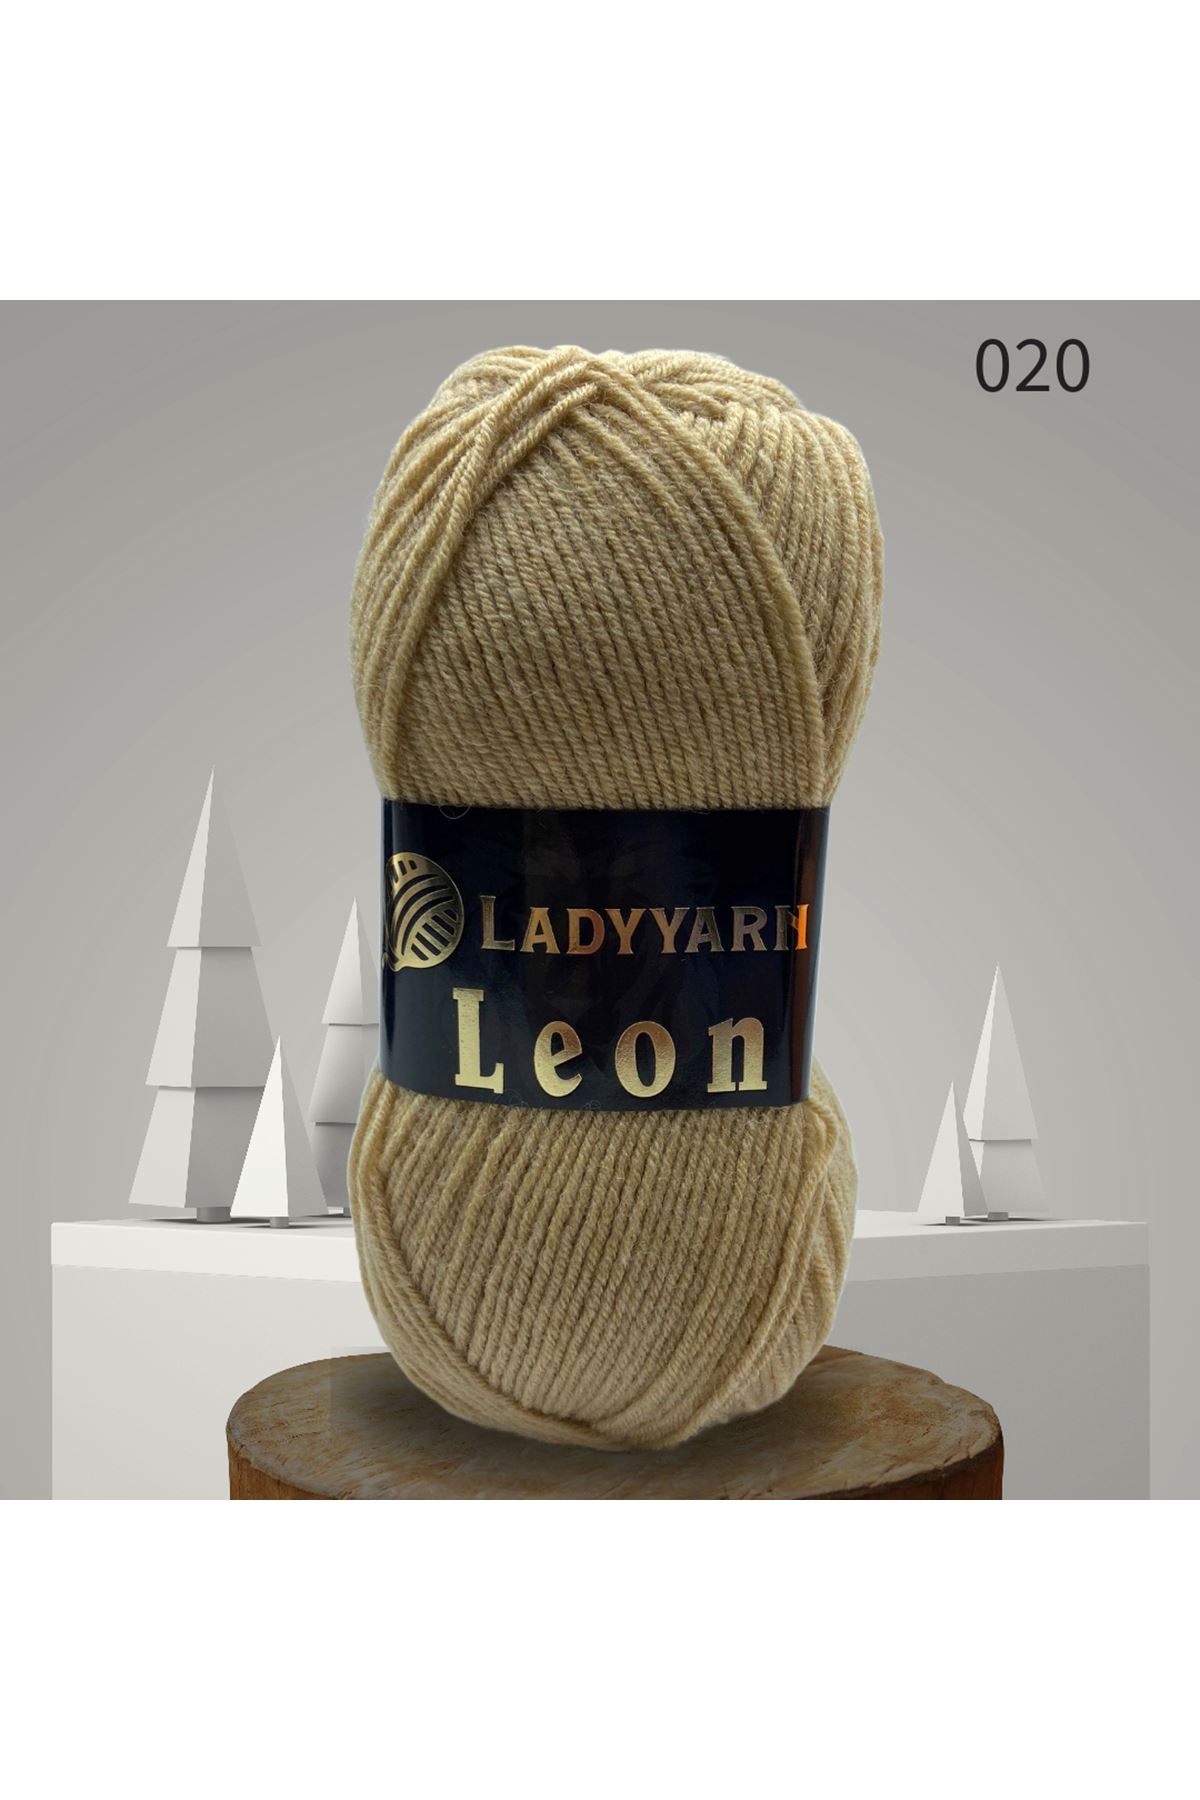 Lady Yarn Leon %49 Yünlü 020 Nohut